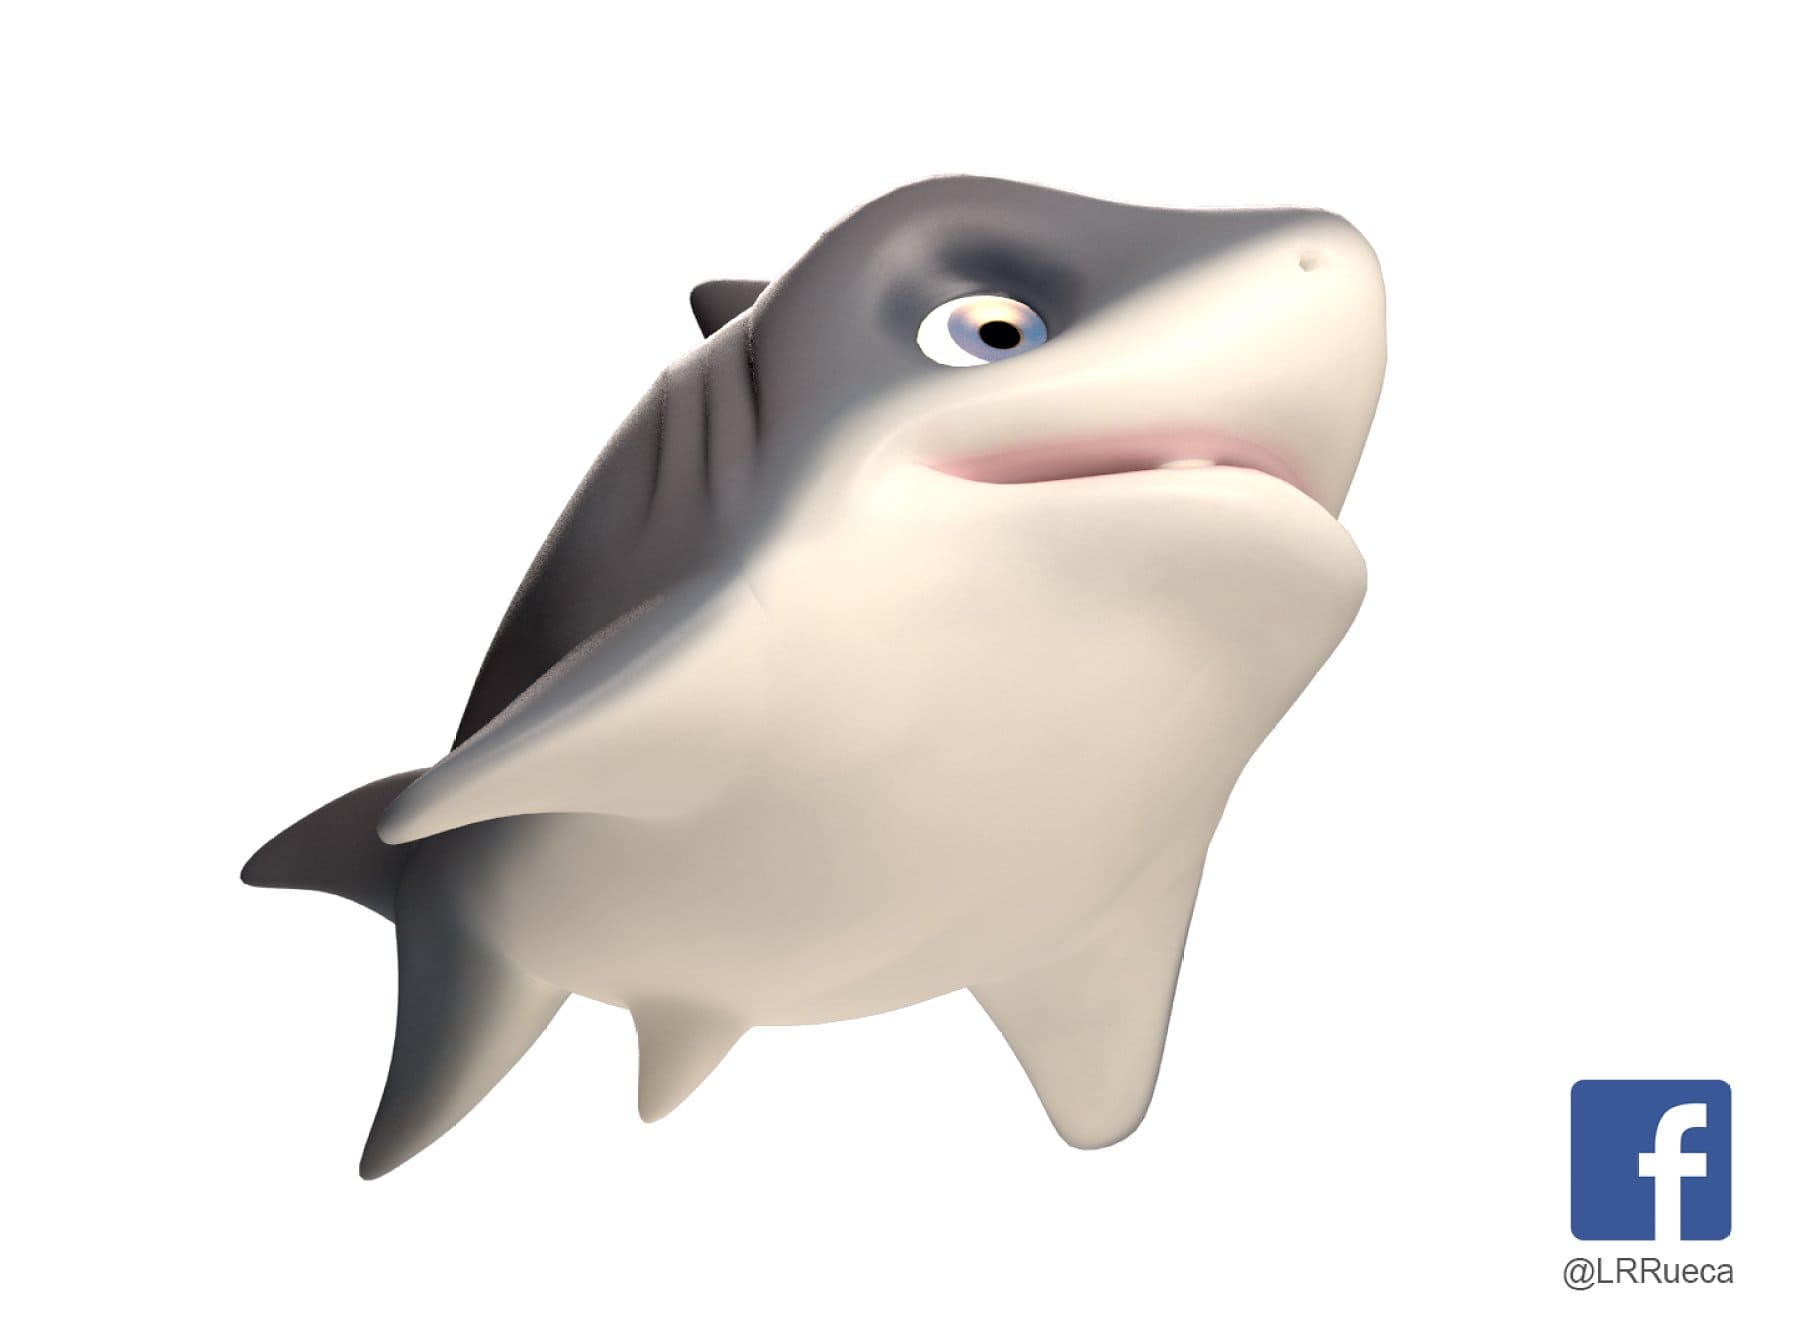 Bottom view of cartoon stylized shark.